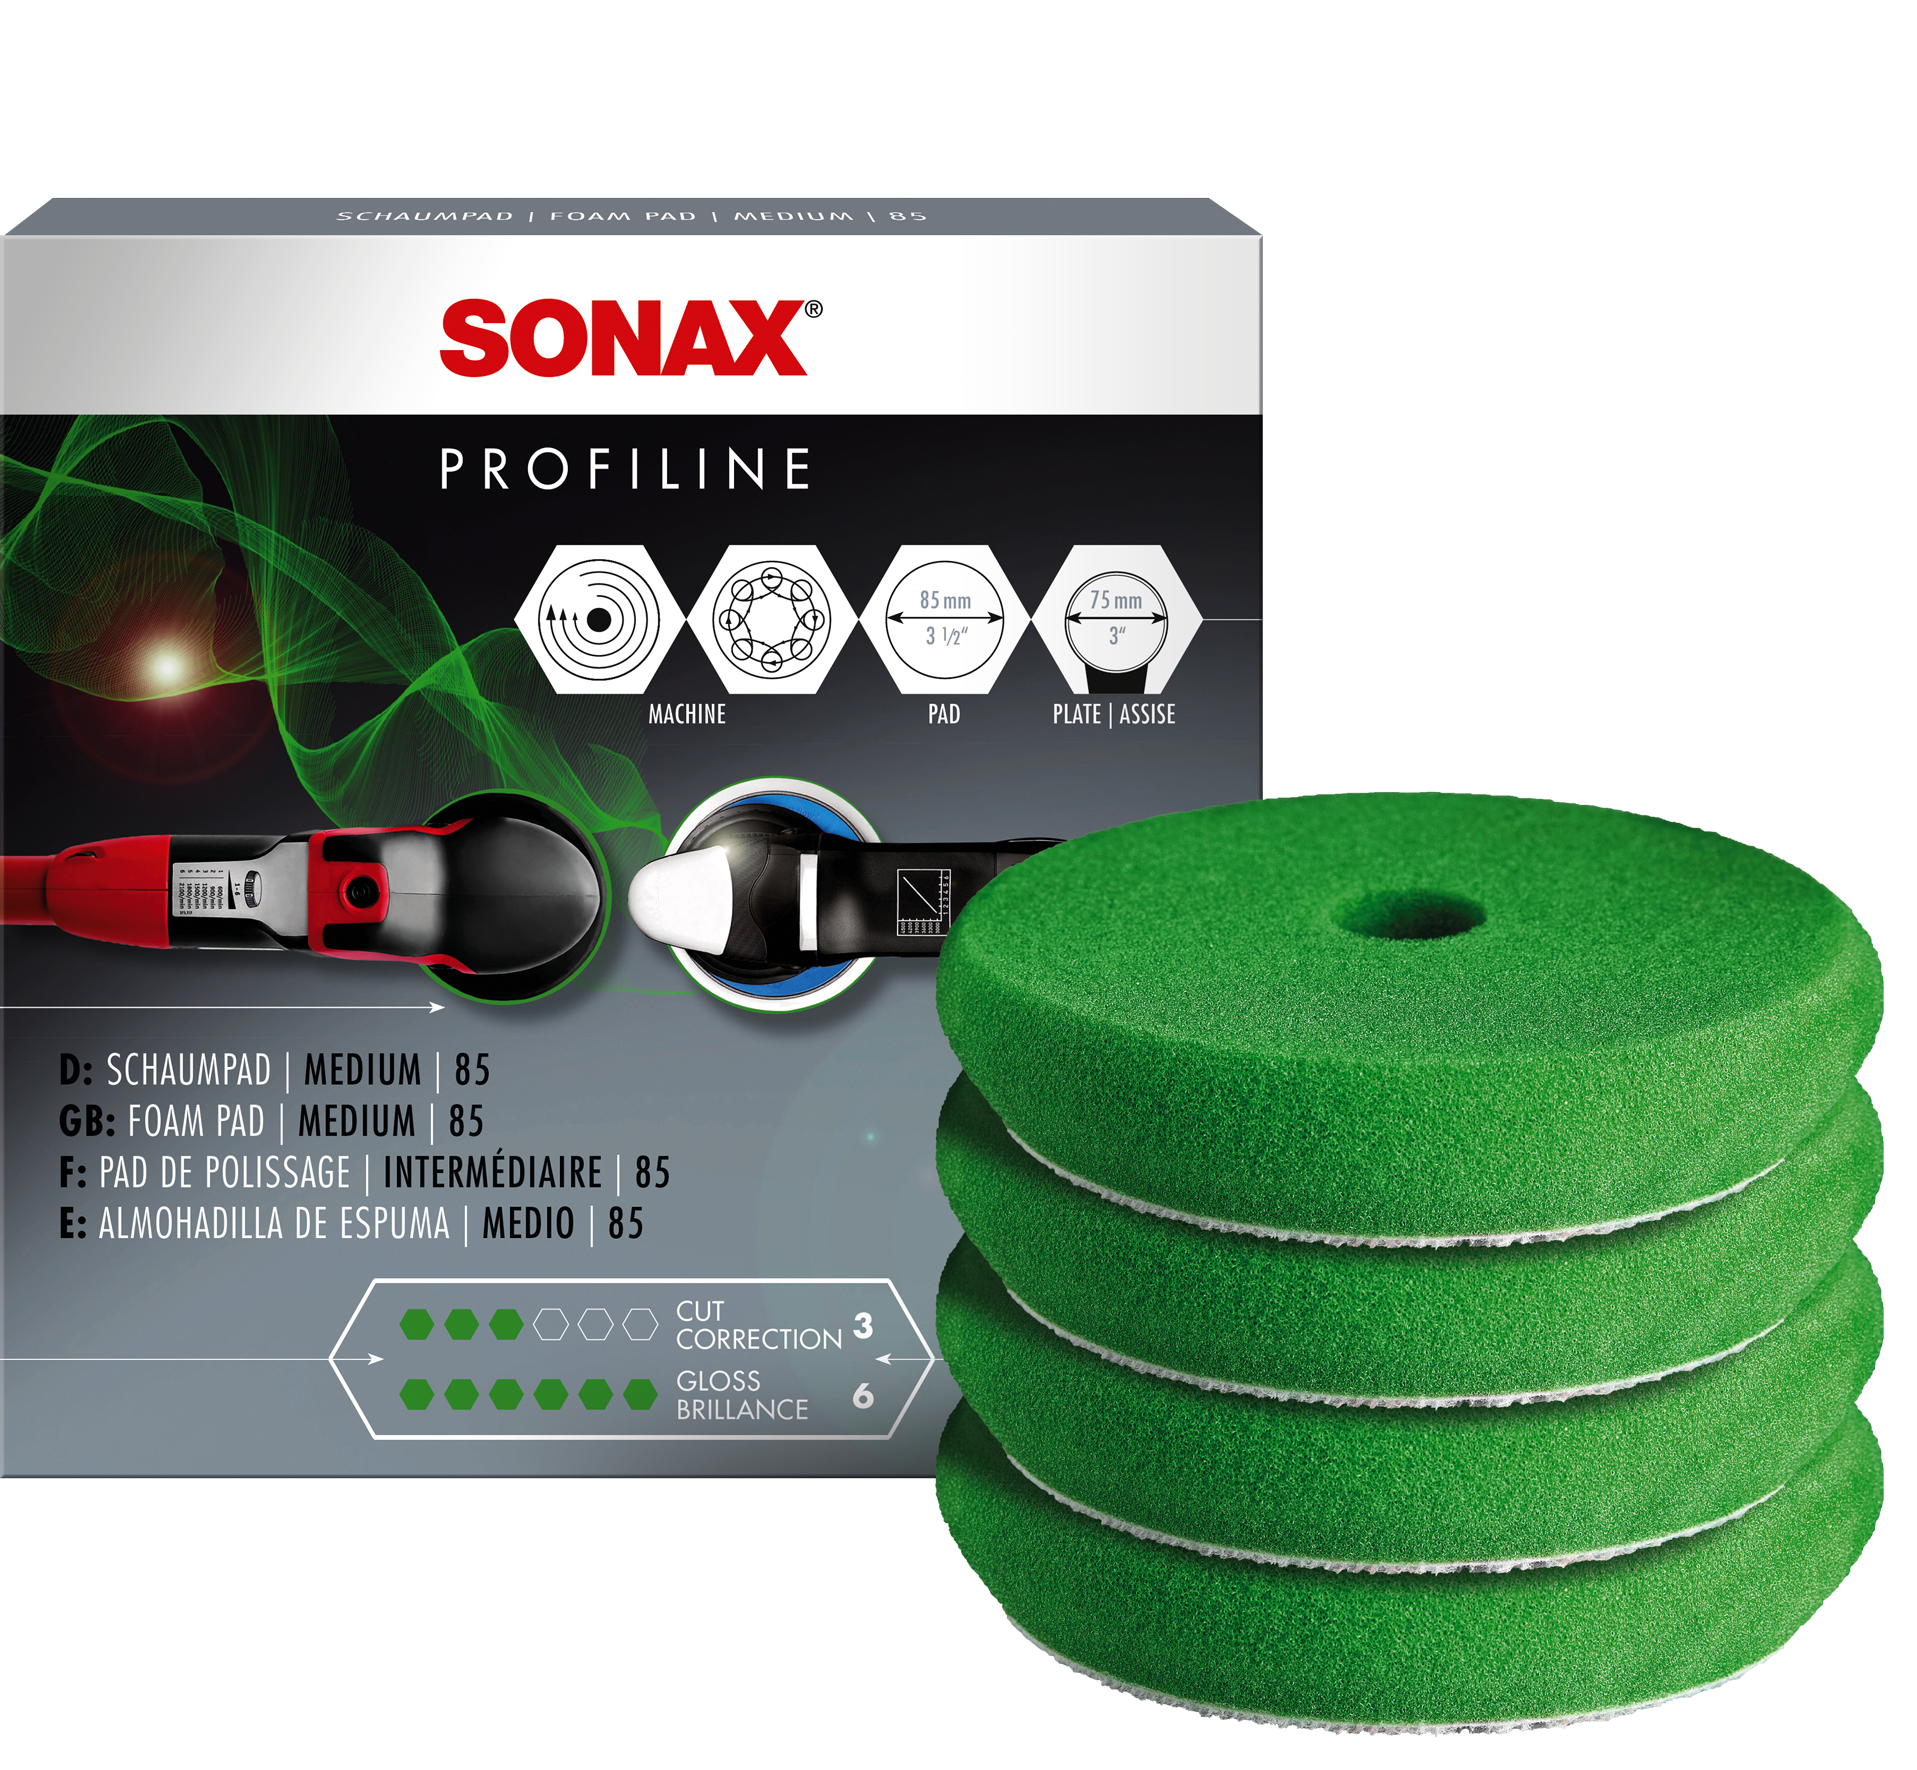 Sonax 04942410 Schaumpad medium 85, 4Stk